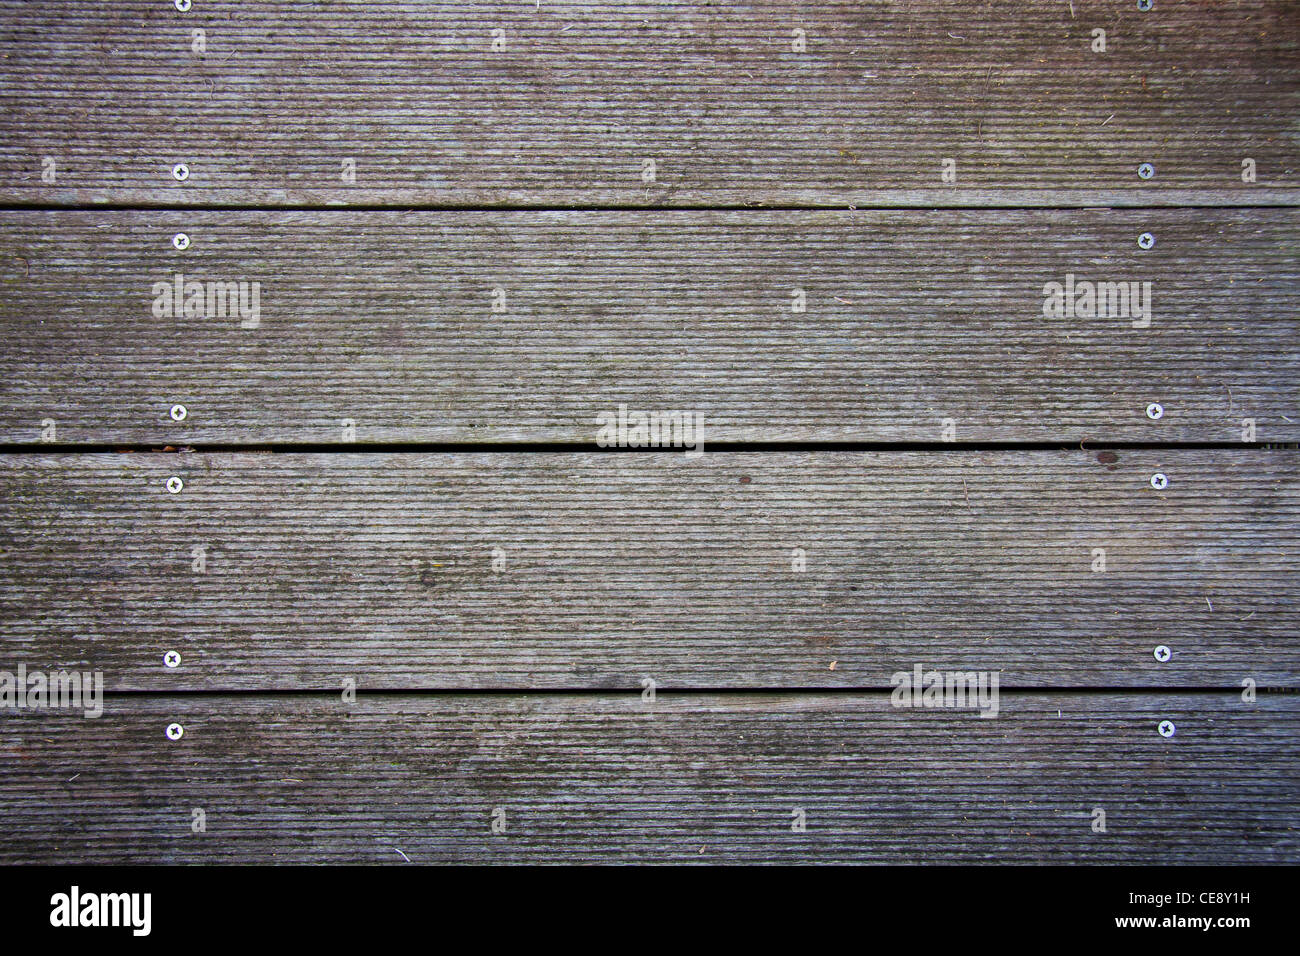 Screwed planks Stock Photo